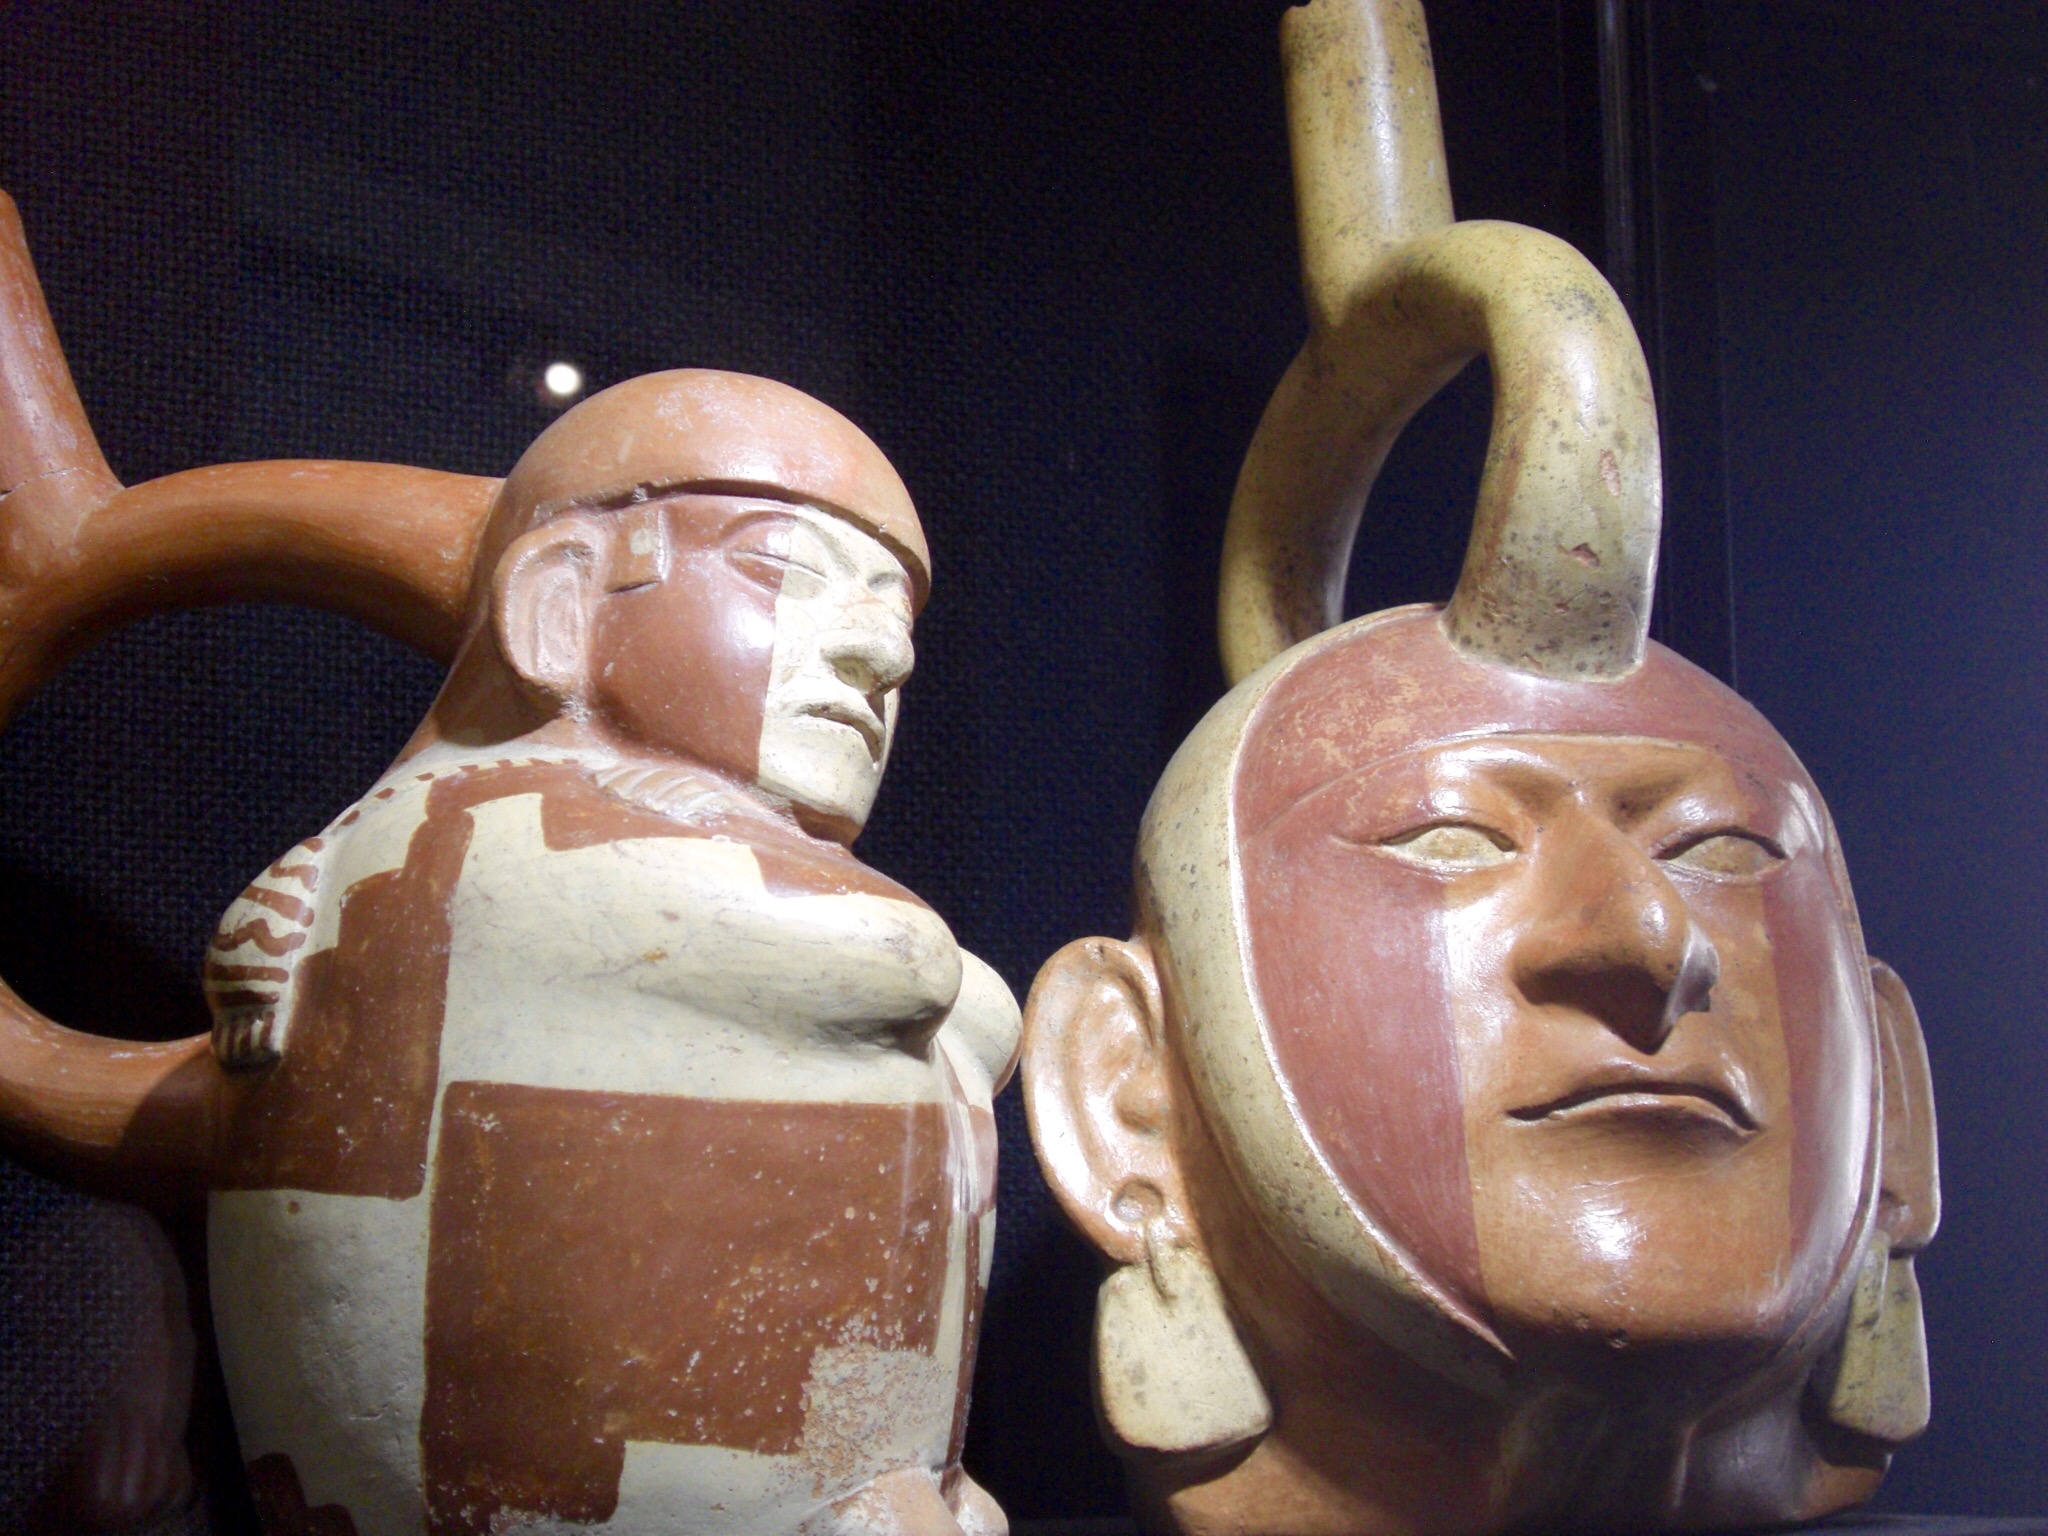 photo: https://upload.wikimedia.org/wikipedia/commons/3/39/MIC-Ceramiche_precolombiane.jpg